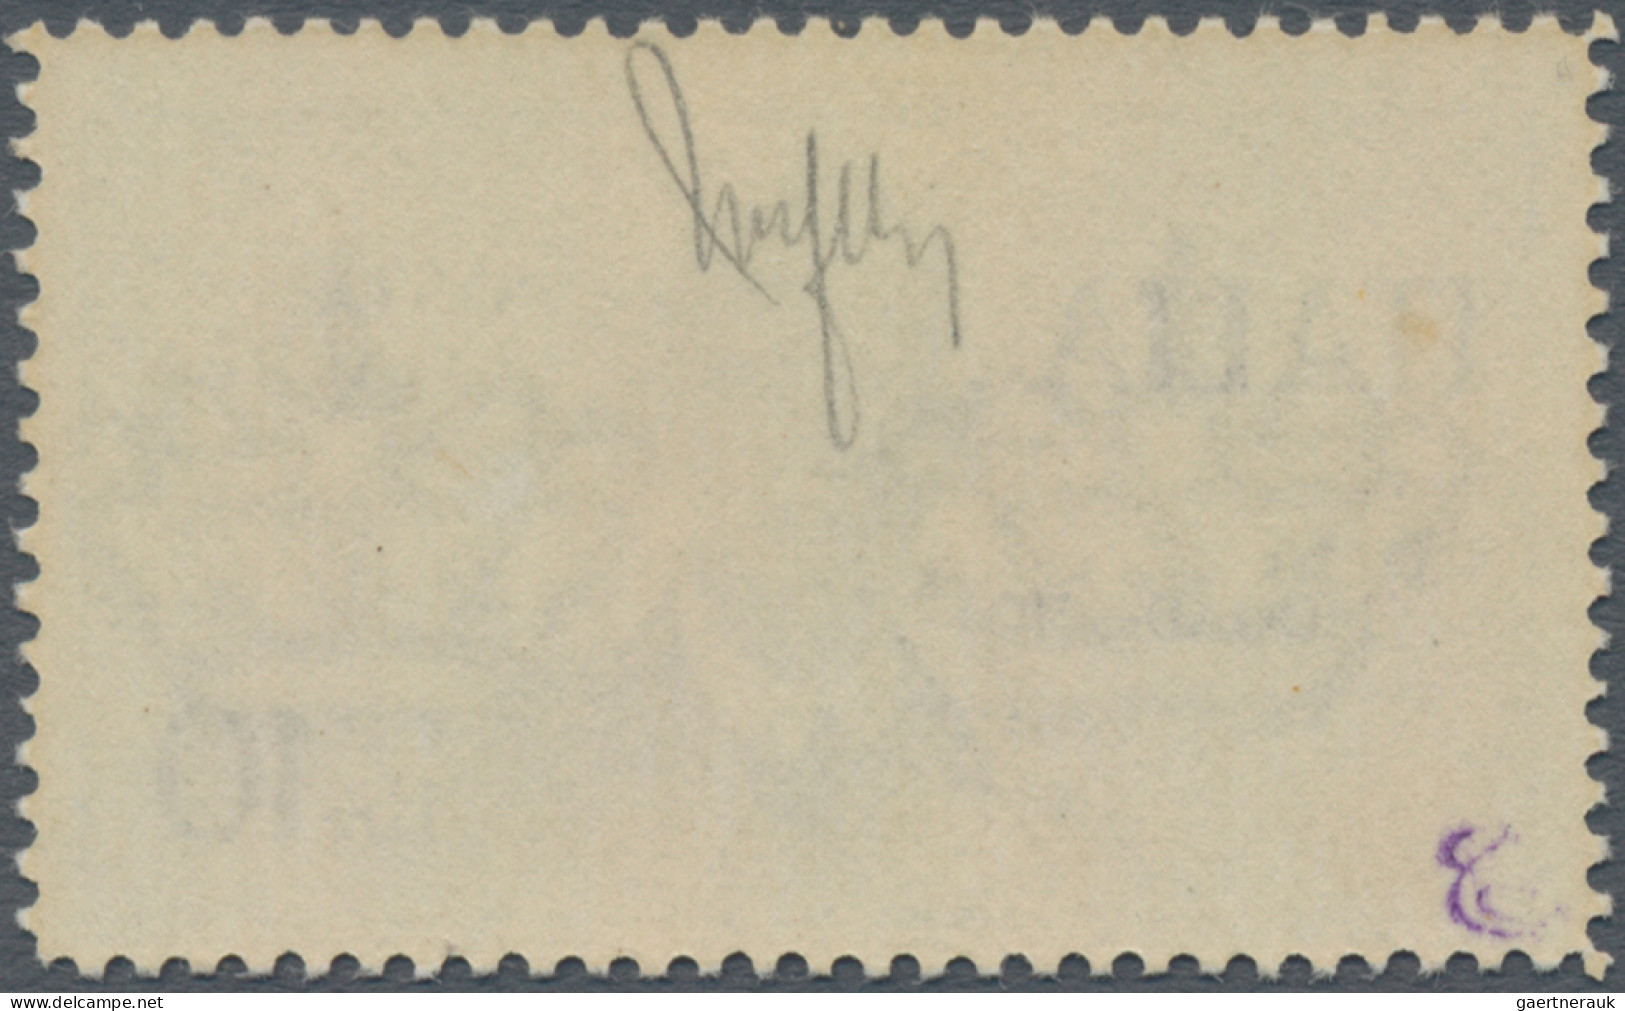 Italy - Service Stamps: 1934, Airmail 10 Lit. Flight Roma-Mogadiscio Ovpt. "Serv - Servizi